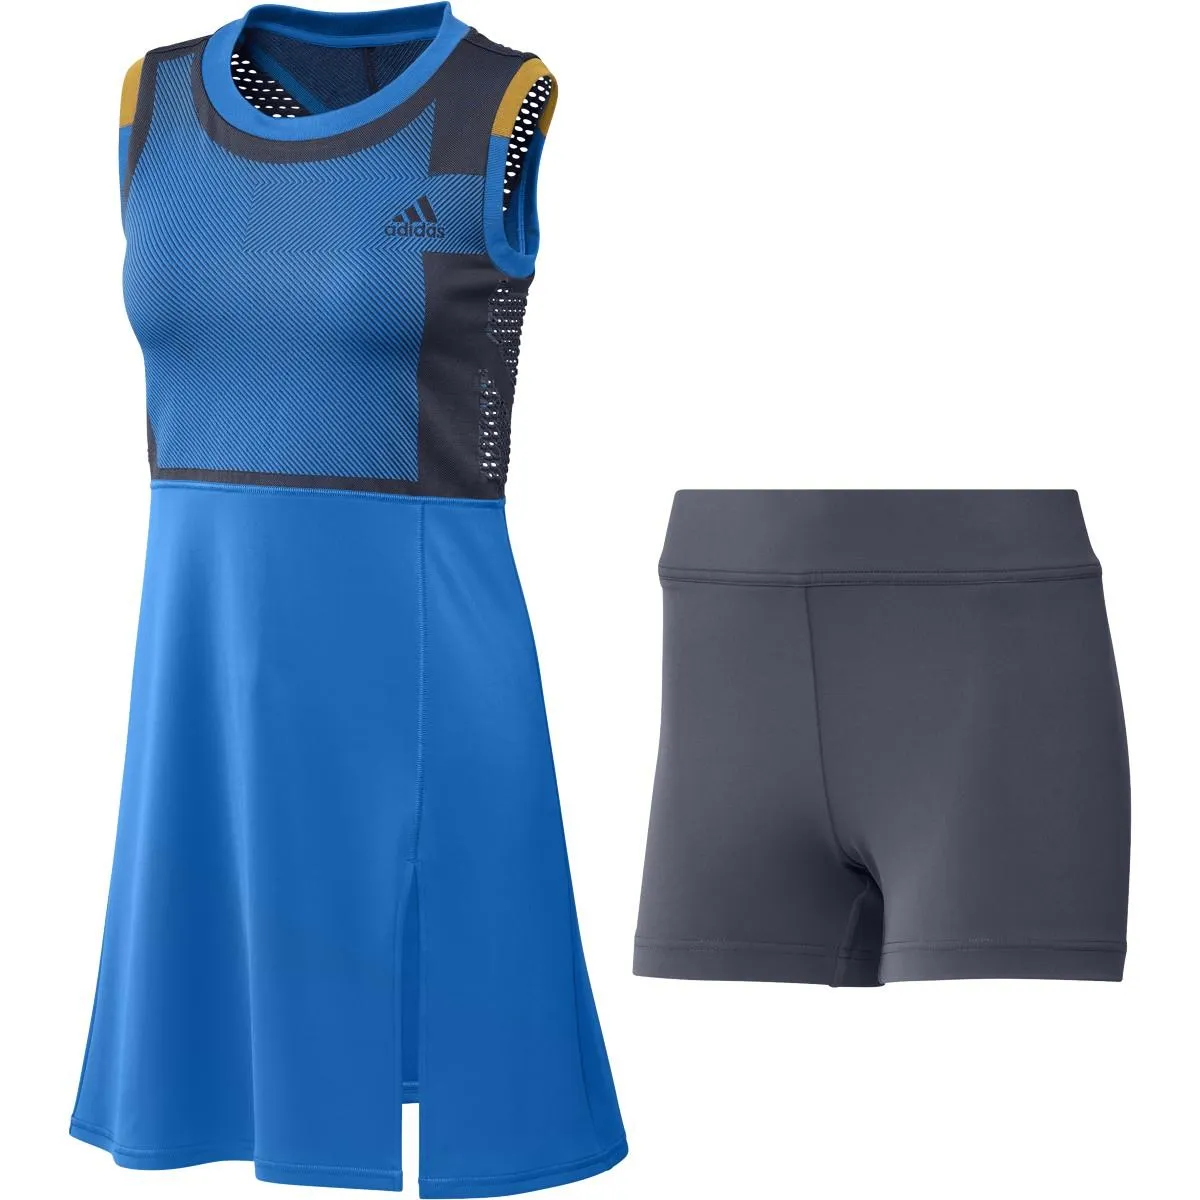 E185379 Adidas Womens Primeknit Primeblue Tennis Premium Dress